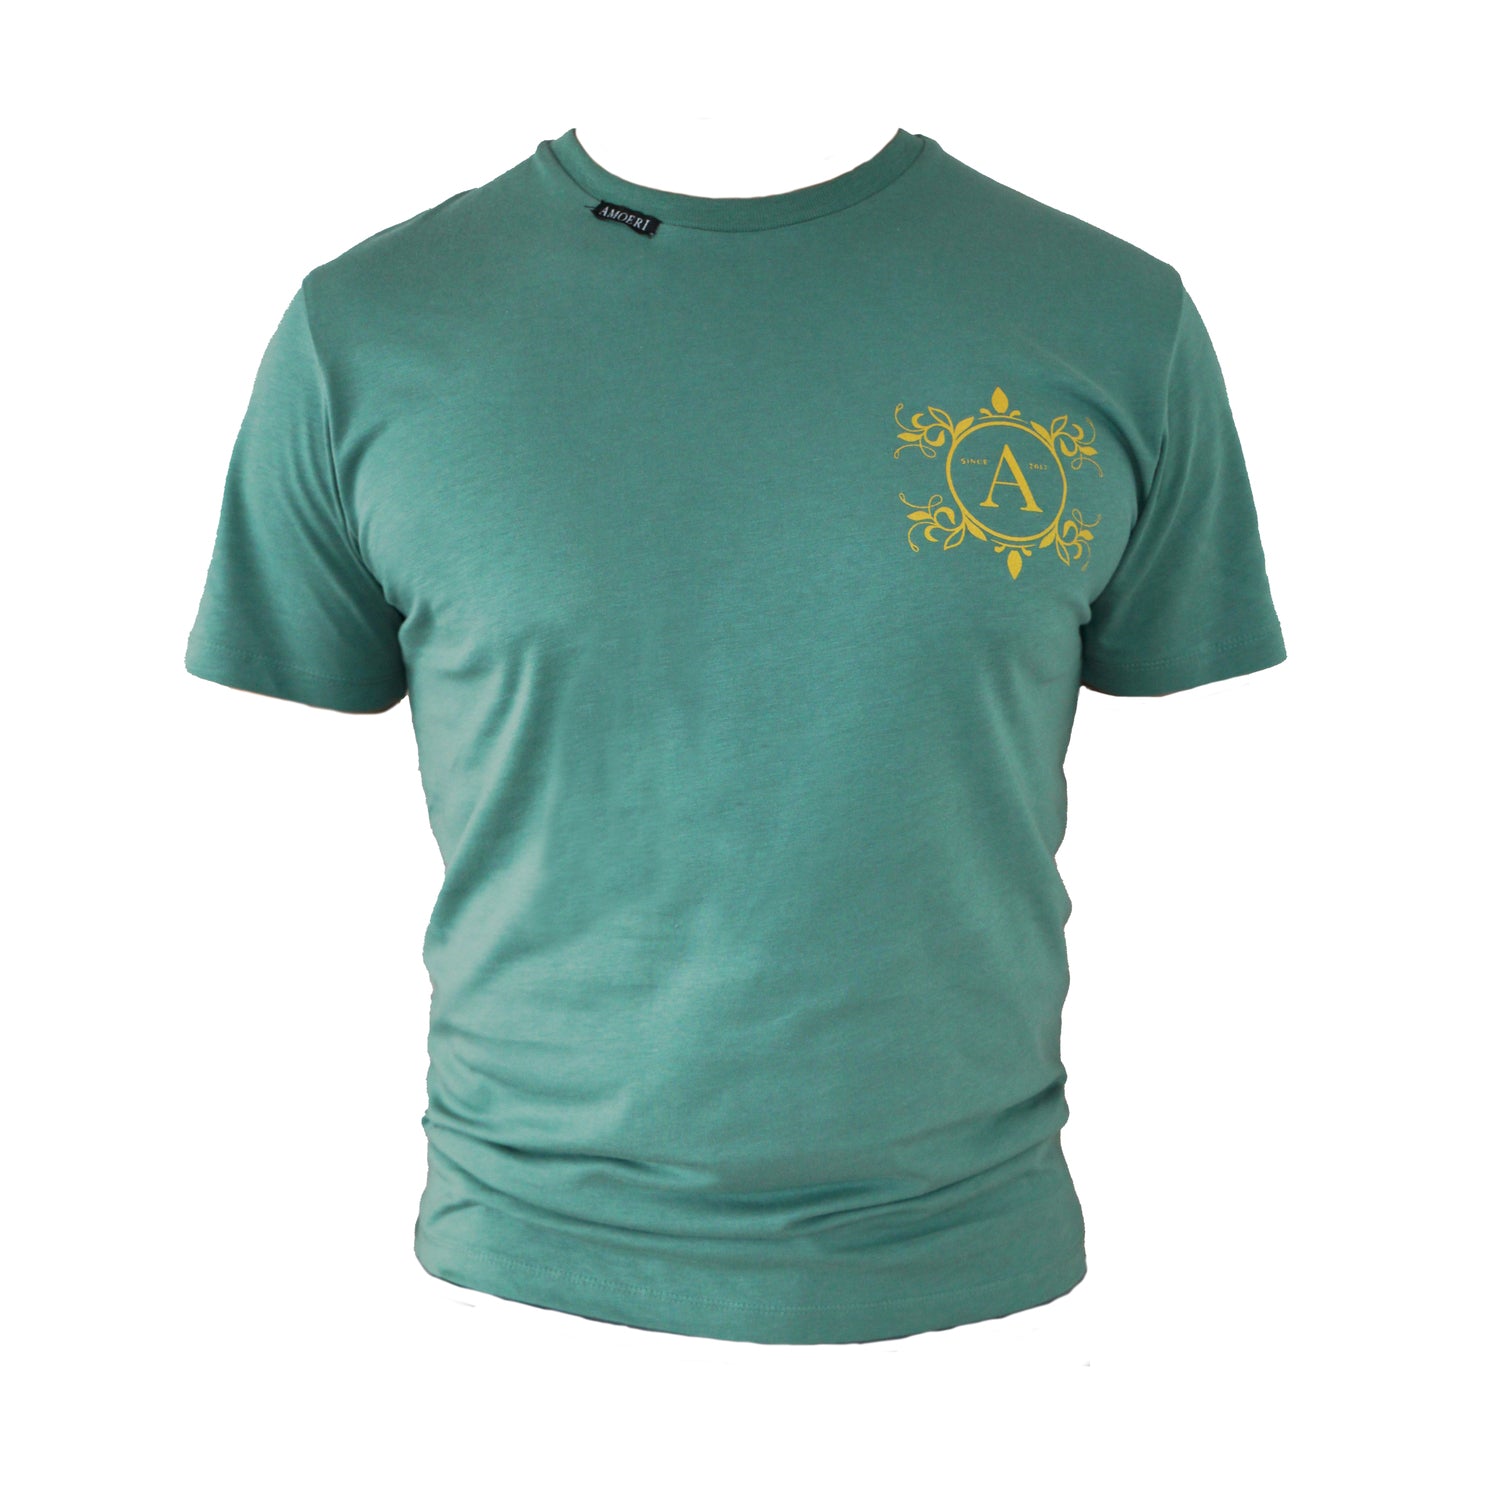 Amoeri T-shirt groen Fashion Styling